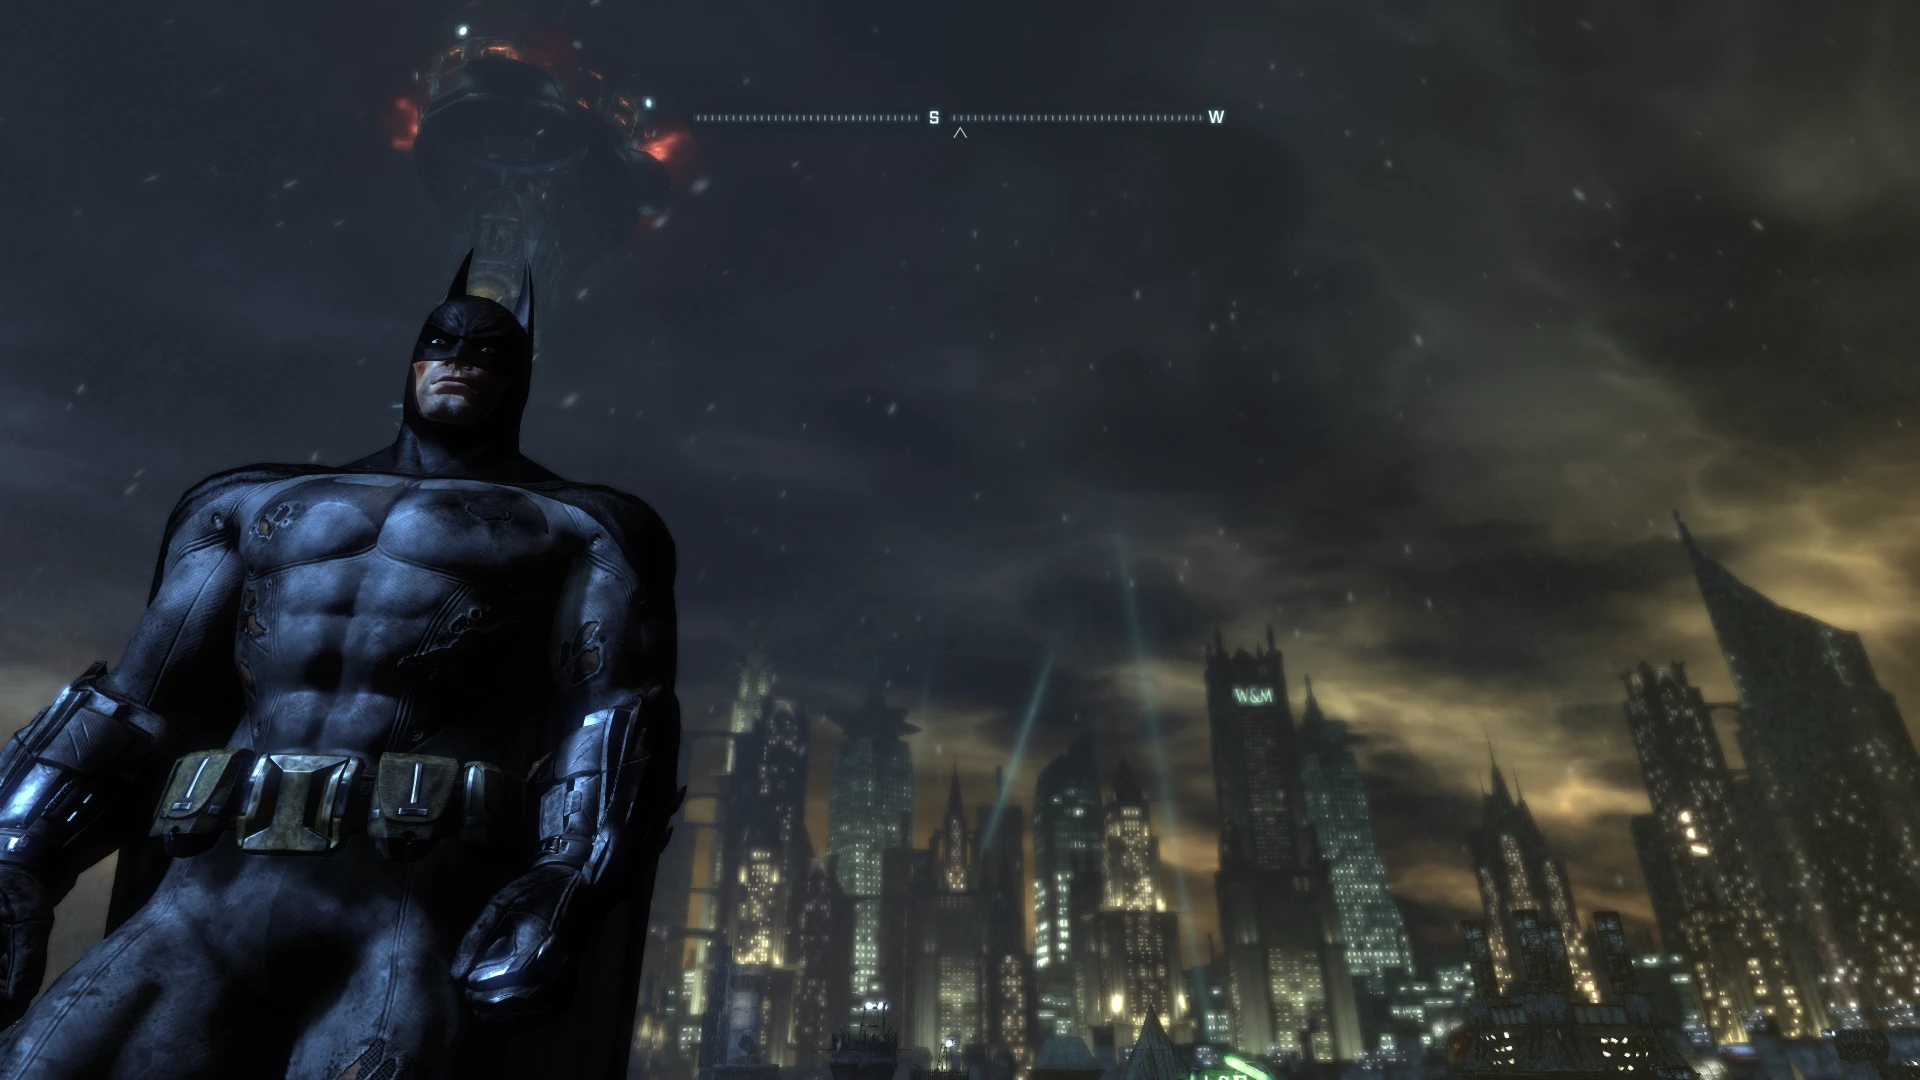 Nexus batman. Бэтмен Аркхем Сити. Batman Arkham City Batsuit. Бэтмен высокое качество. Бэтмен на смартфон.